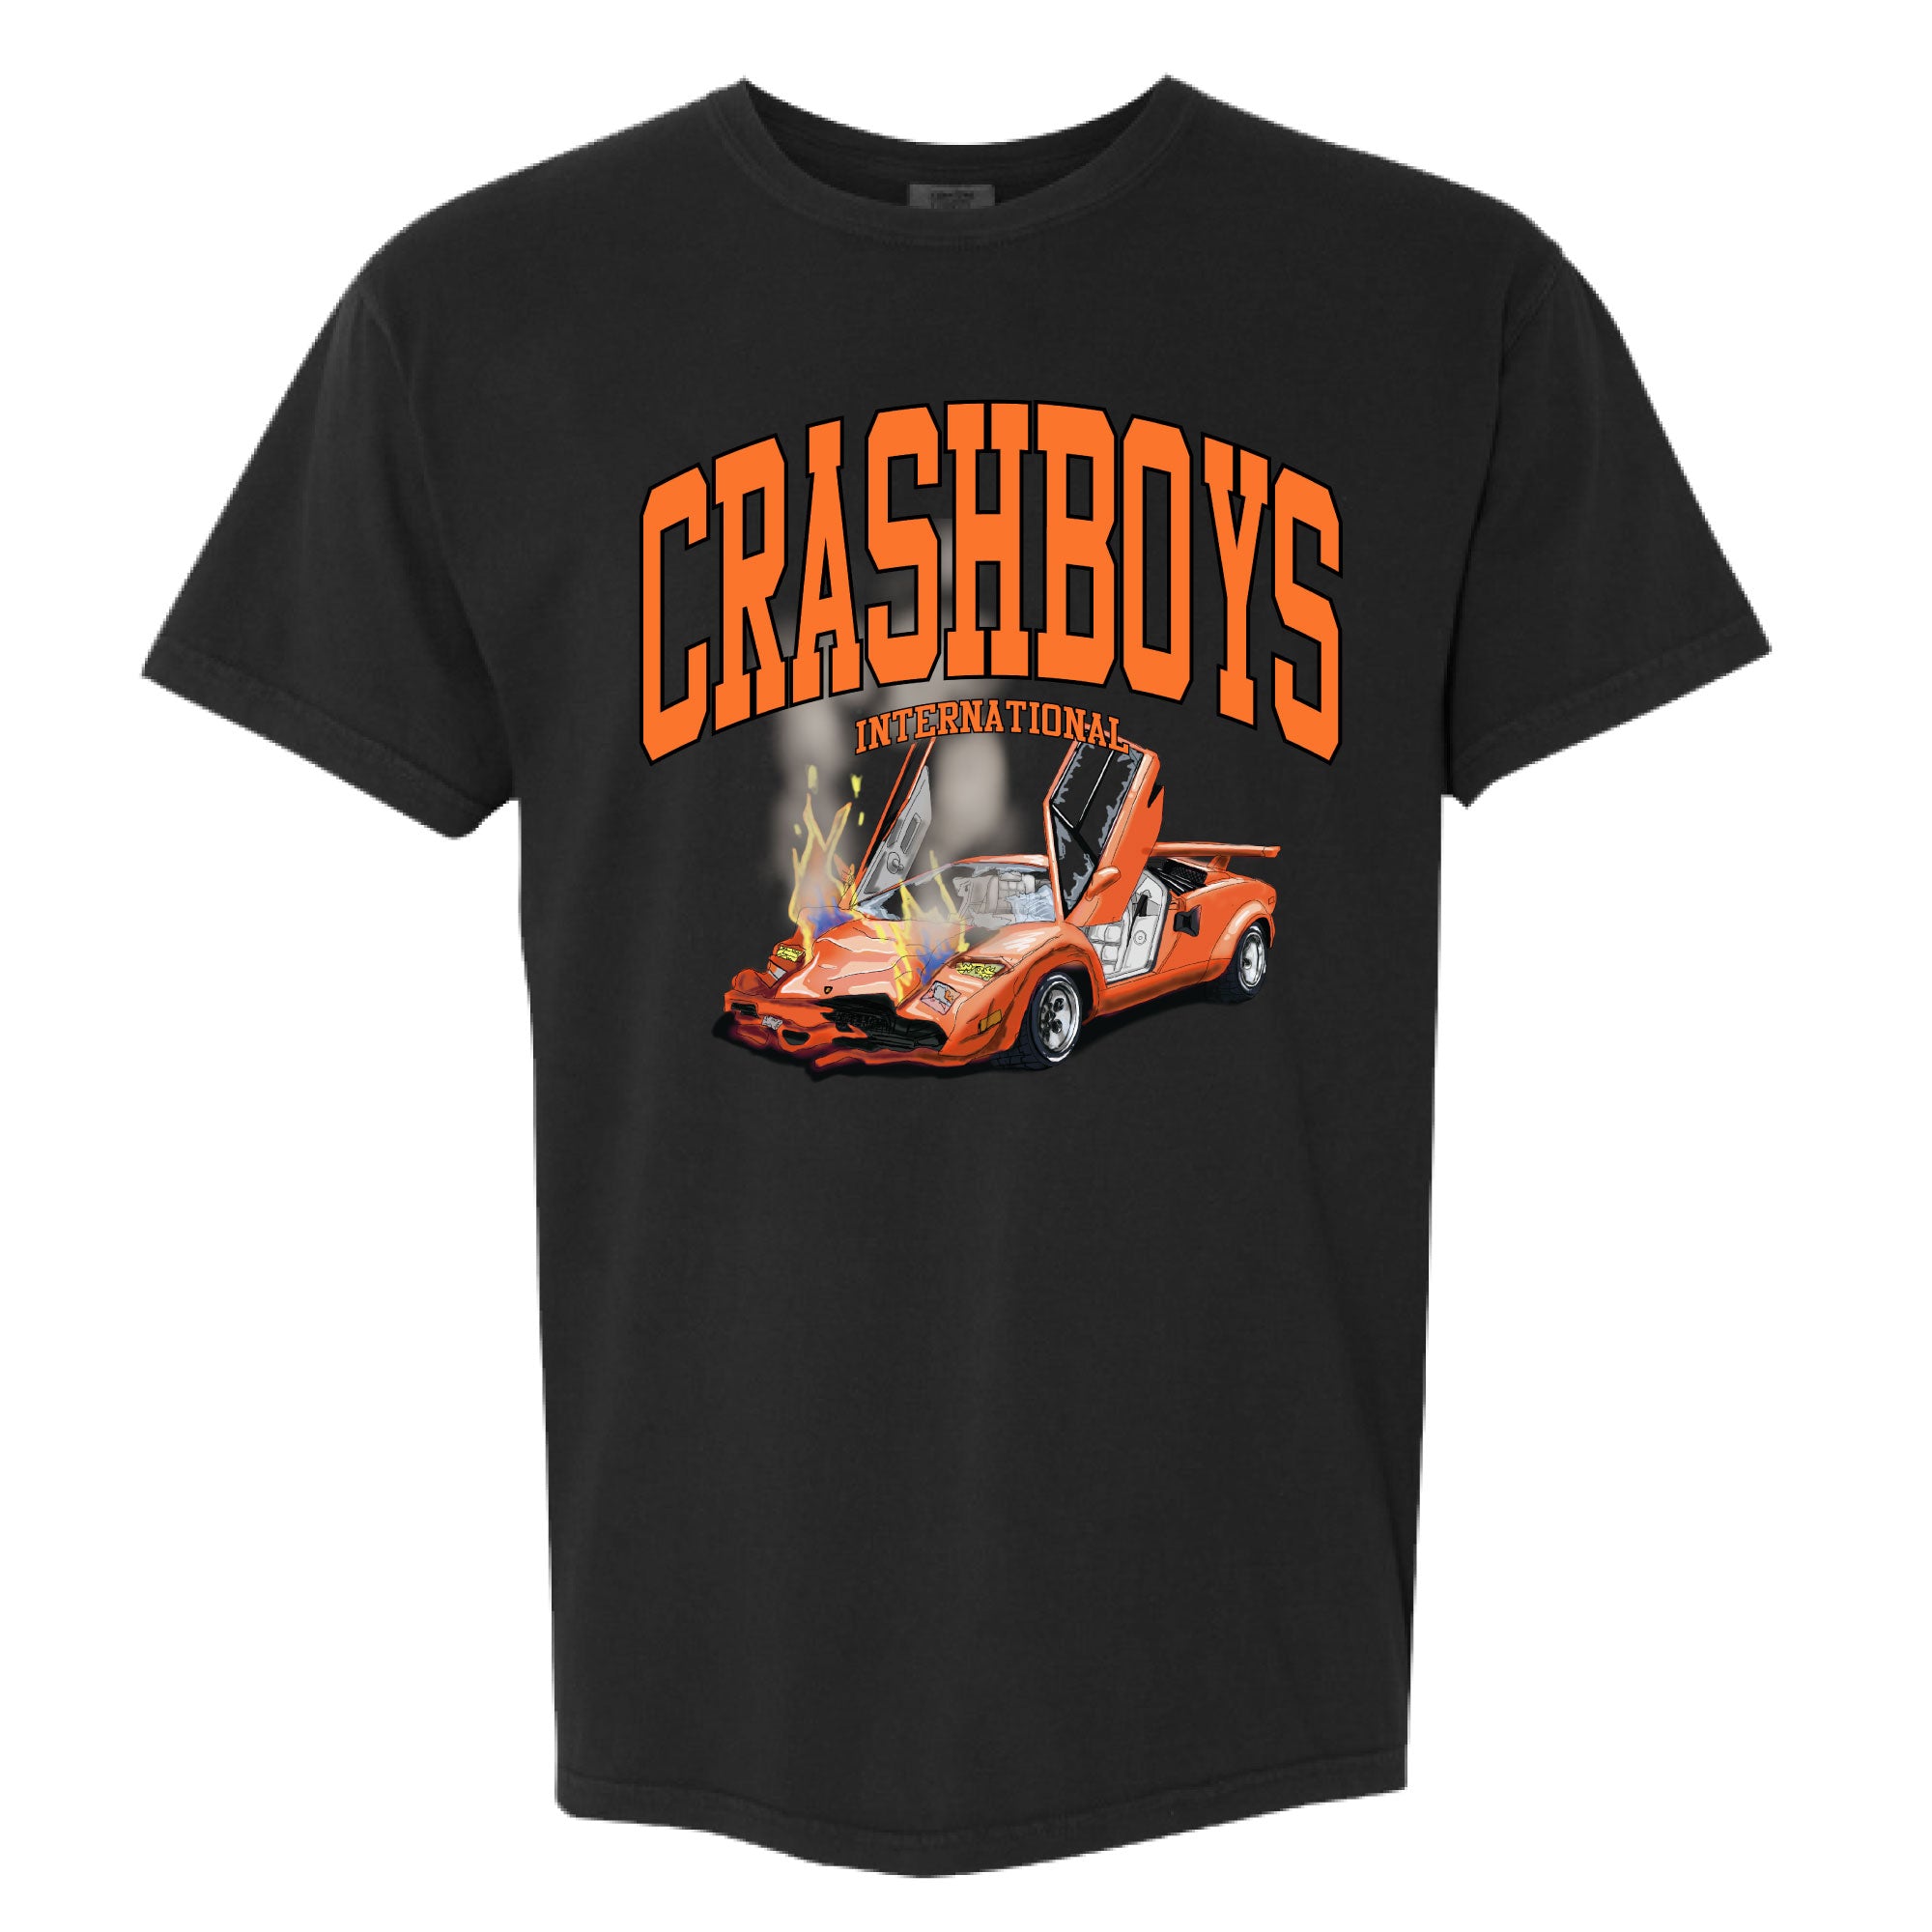 Crashboys International